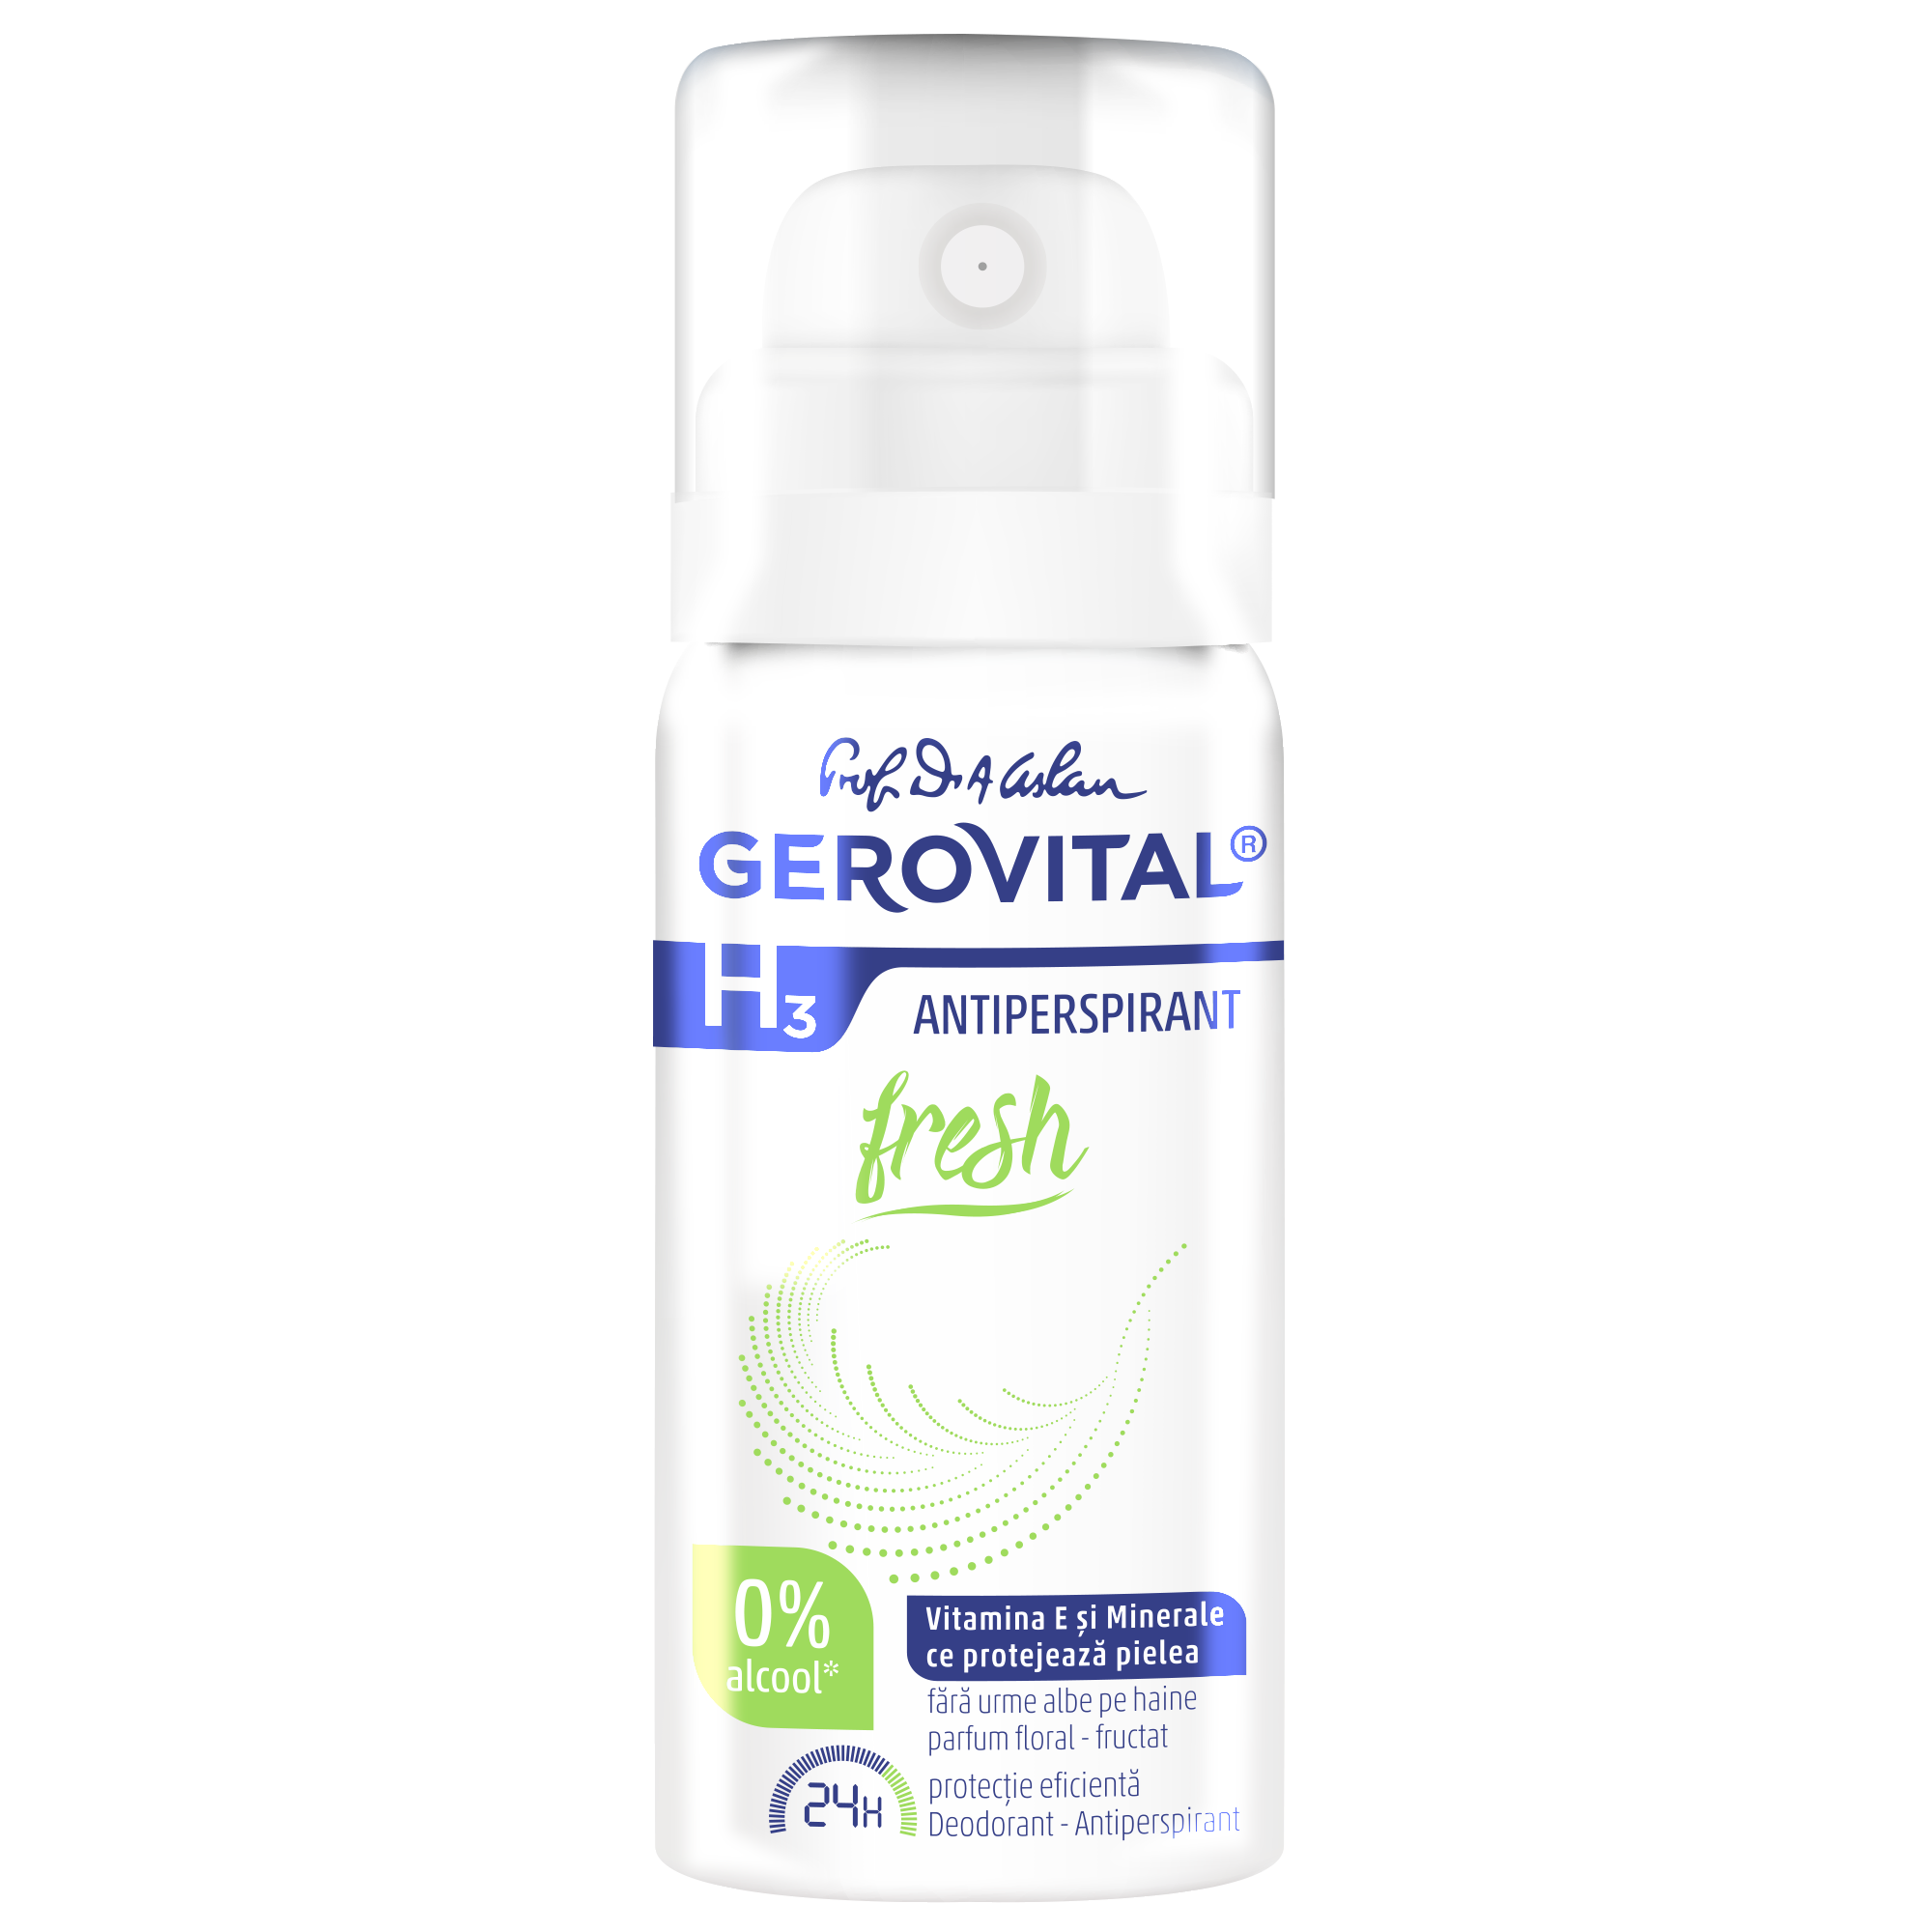 Deodorant spray Gerovital H3 Antiperspirant, Fresh, 40 ml, Gerovital